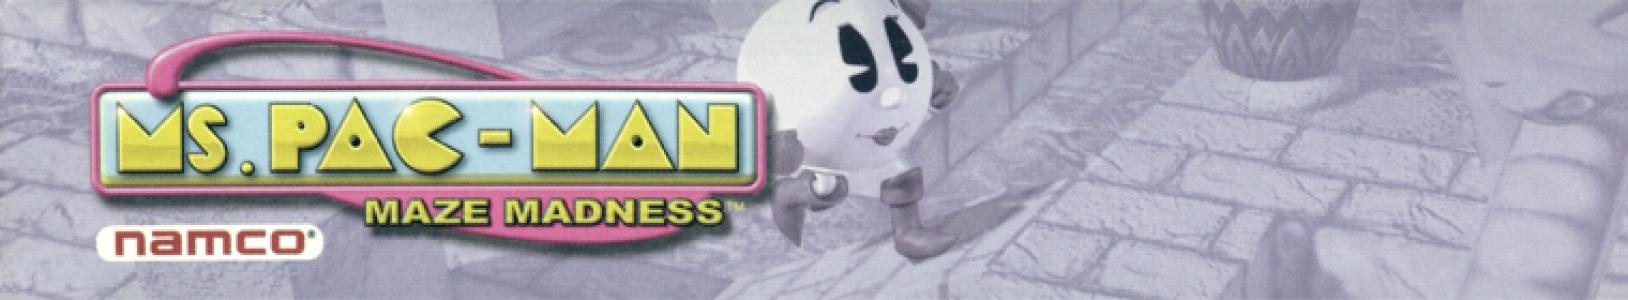 Ms. Pac-Man Maze Madness banner